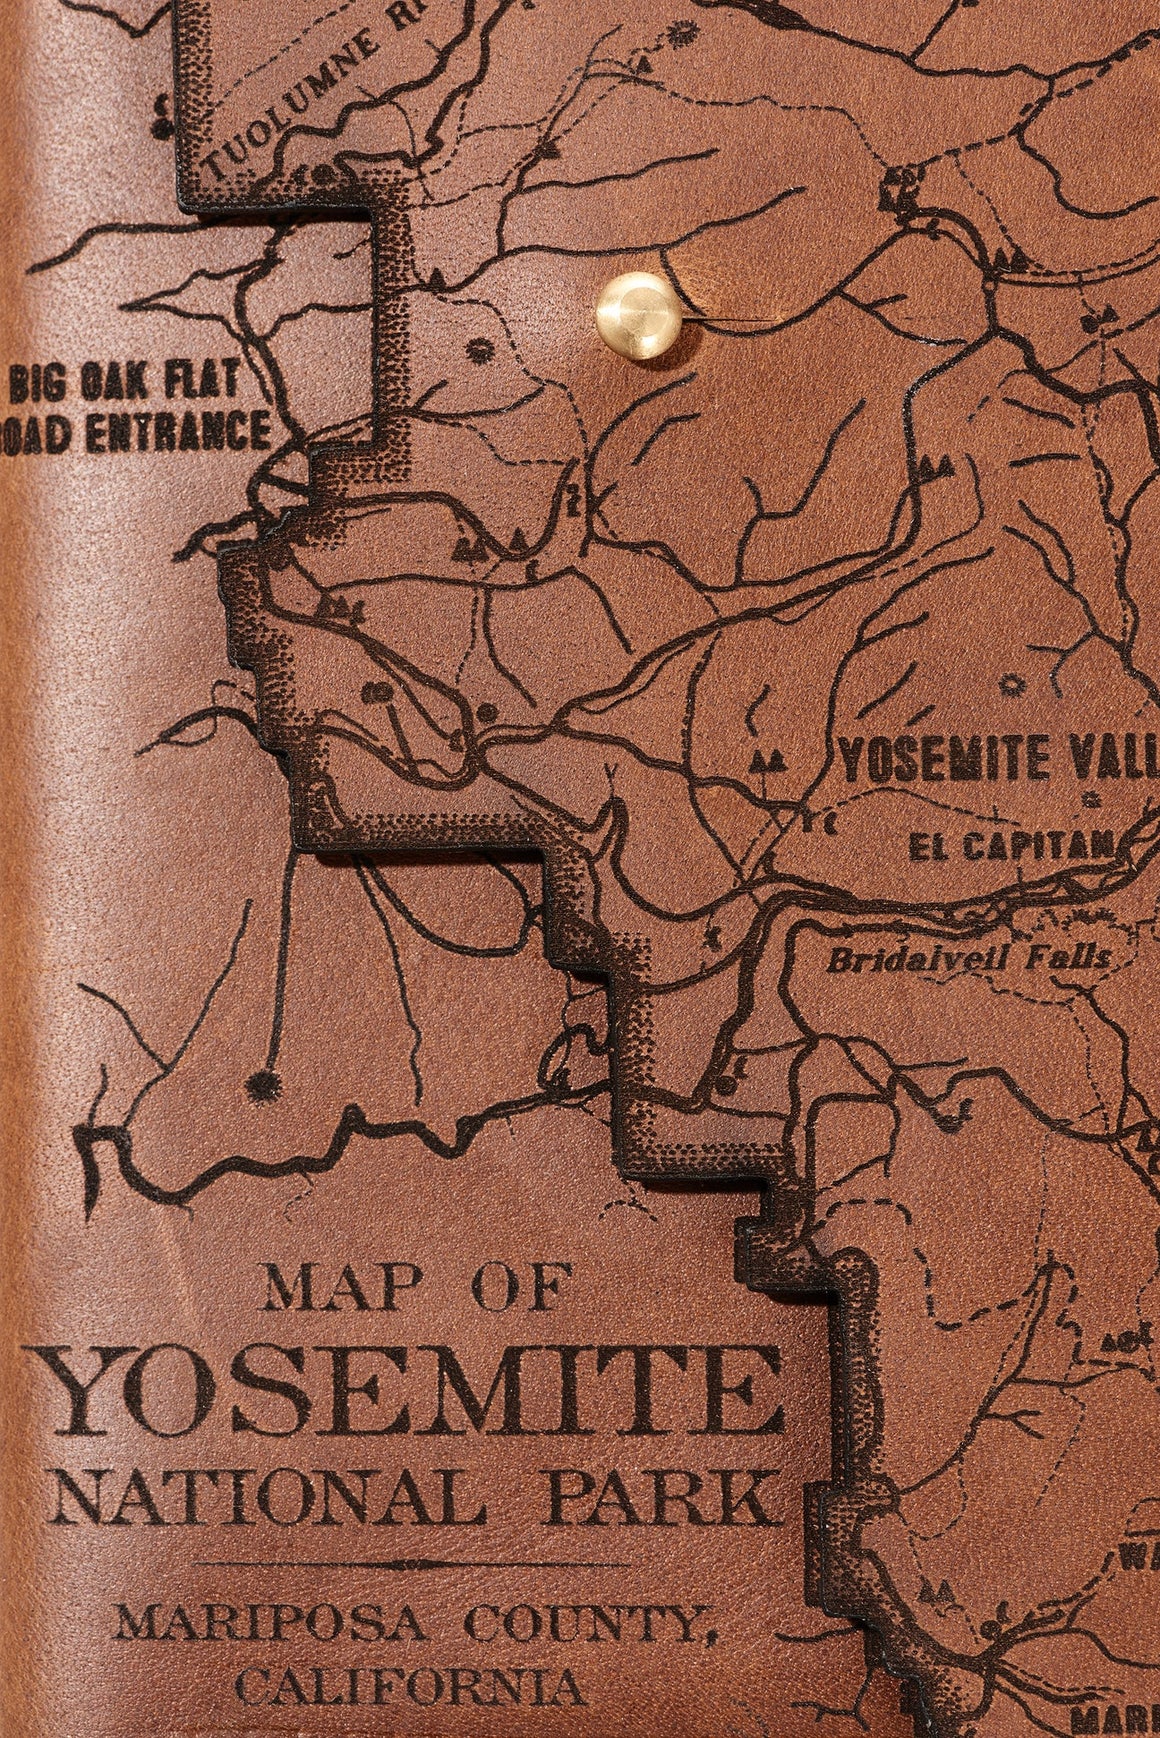 Yosemite National Park Journal